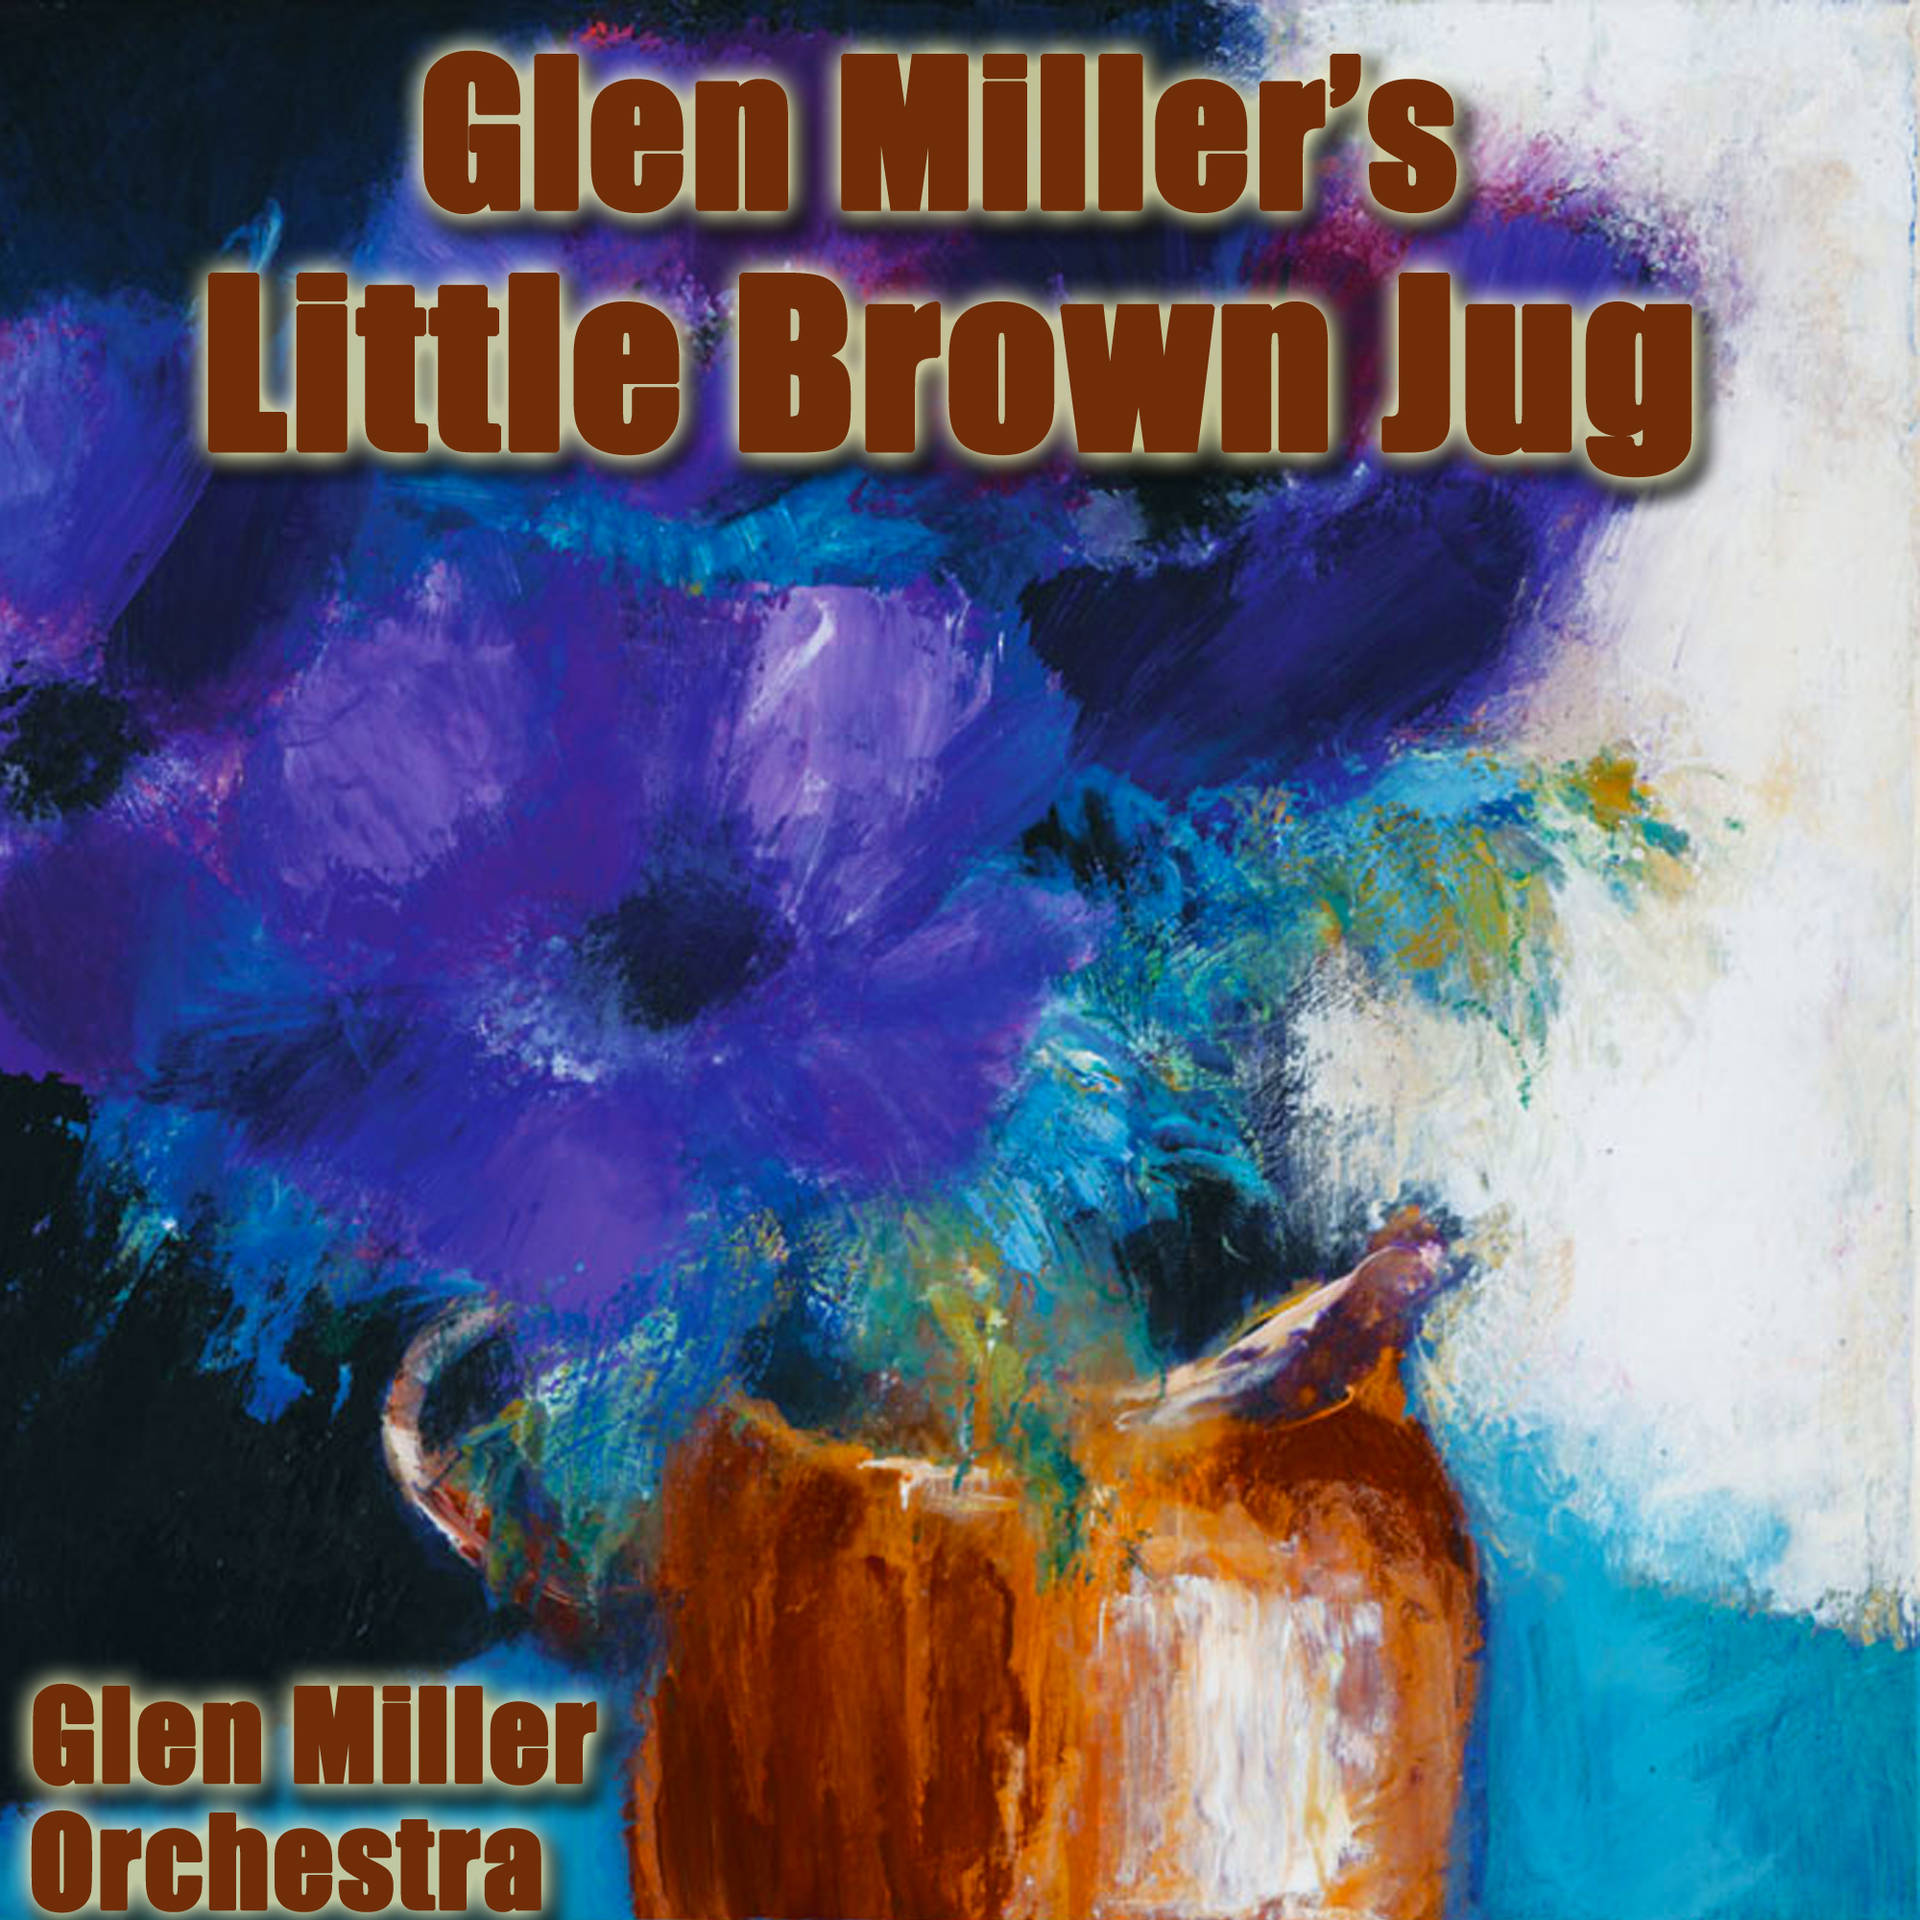 Littlebrown Jug De Glenn Miller Fondo de pantalla